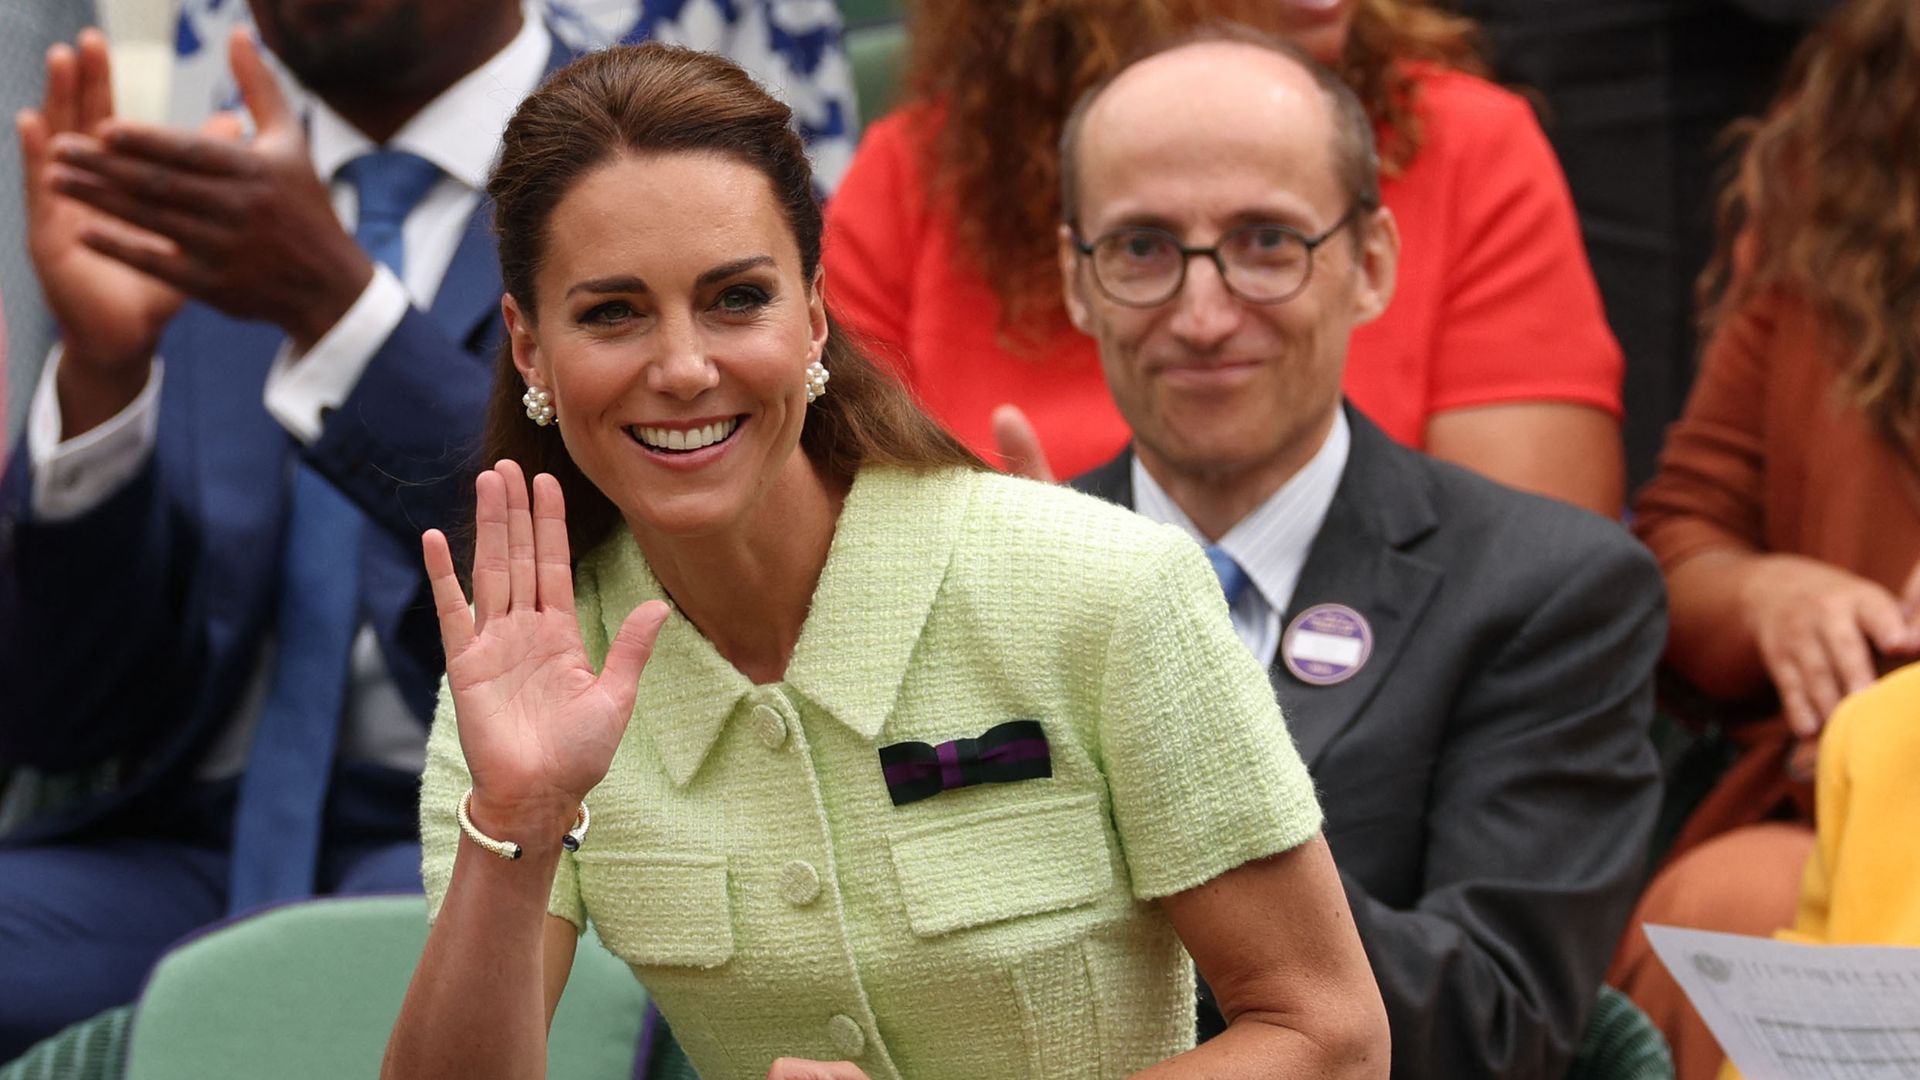 Kate Middleton waving from royal box at Wimbledon